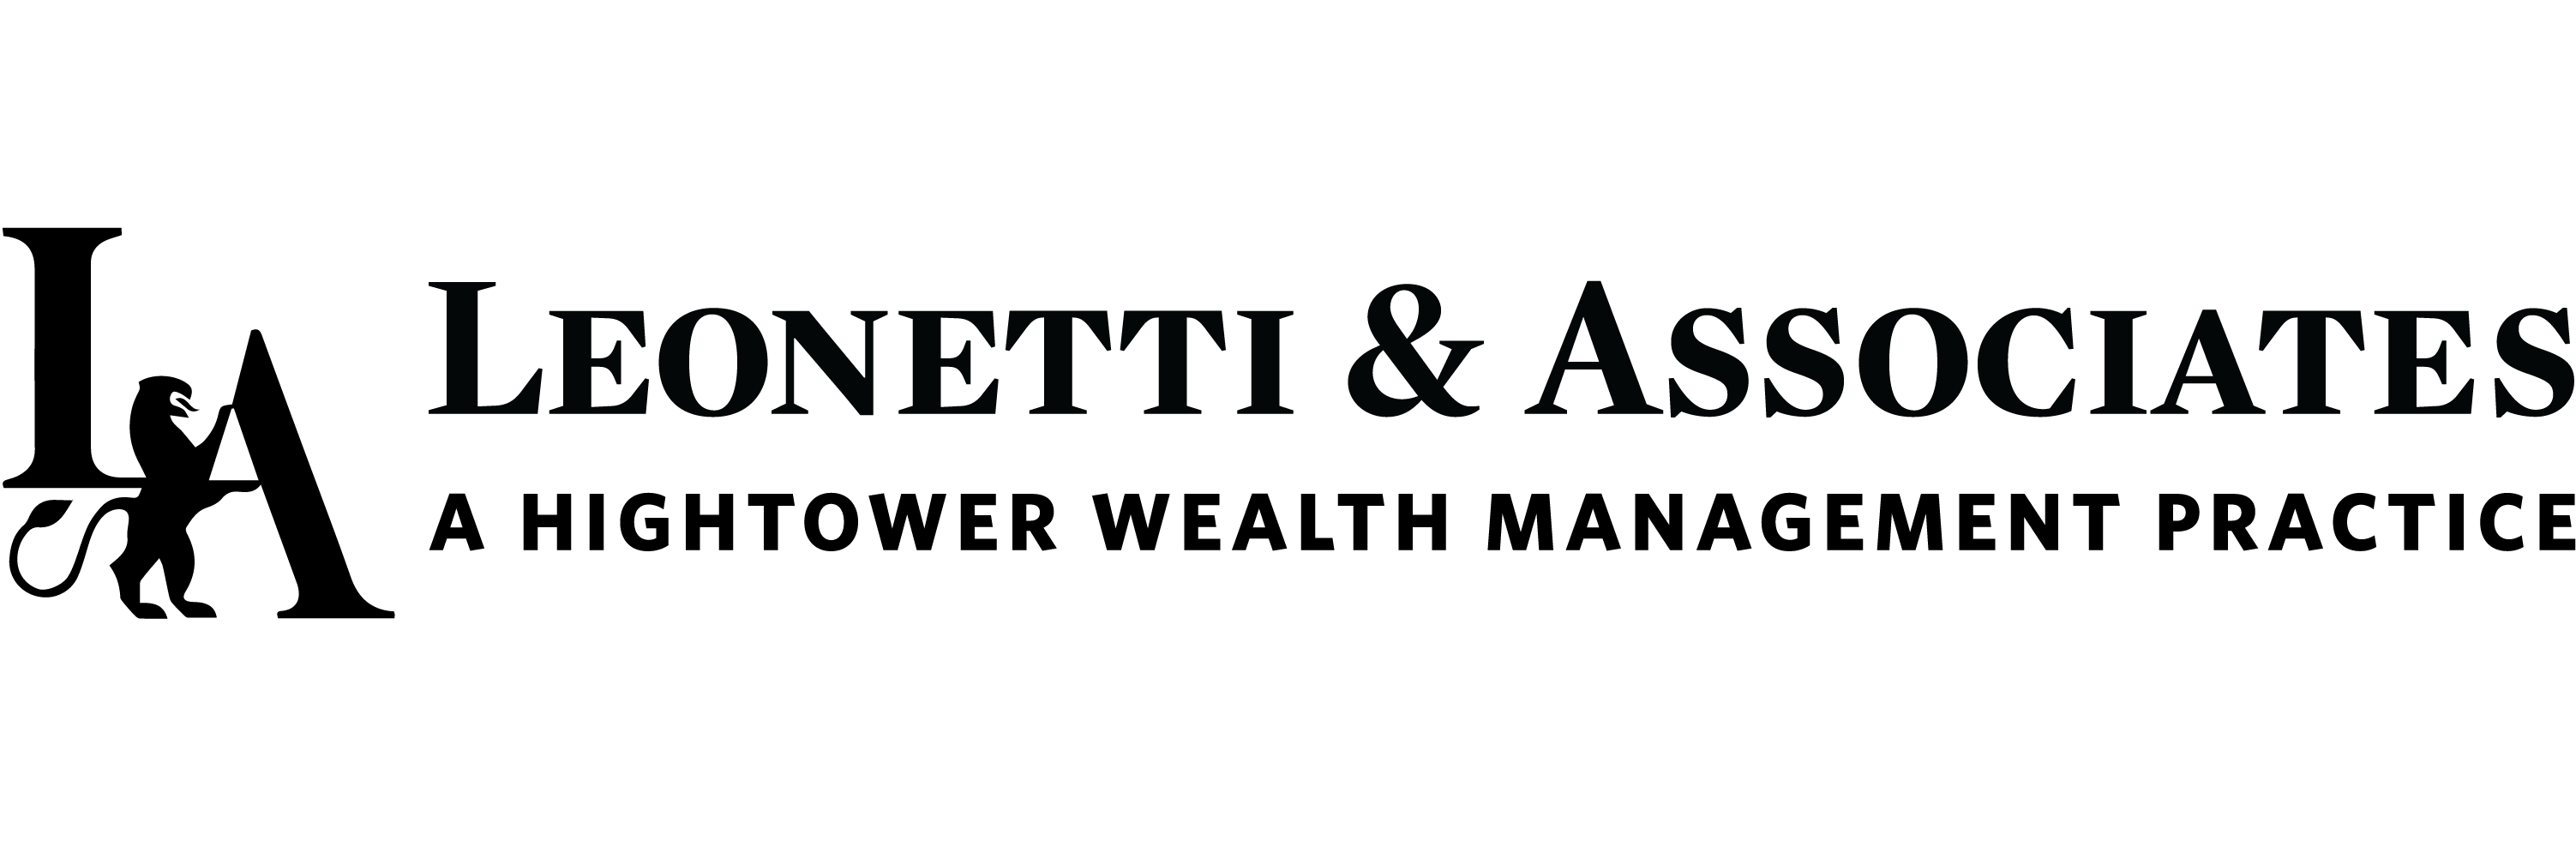 Hightower Logo - Leonetti & Associates A HighTower Wealth Management Firm - Overview